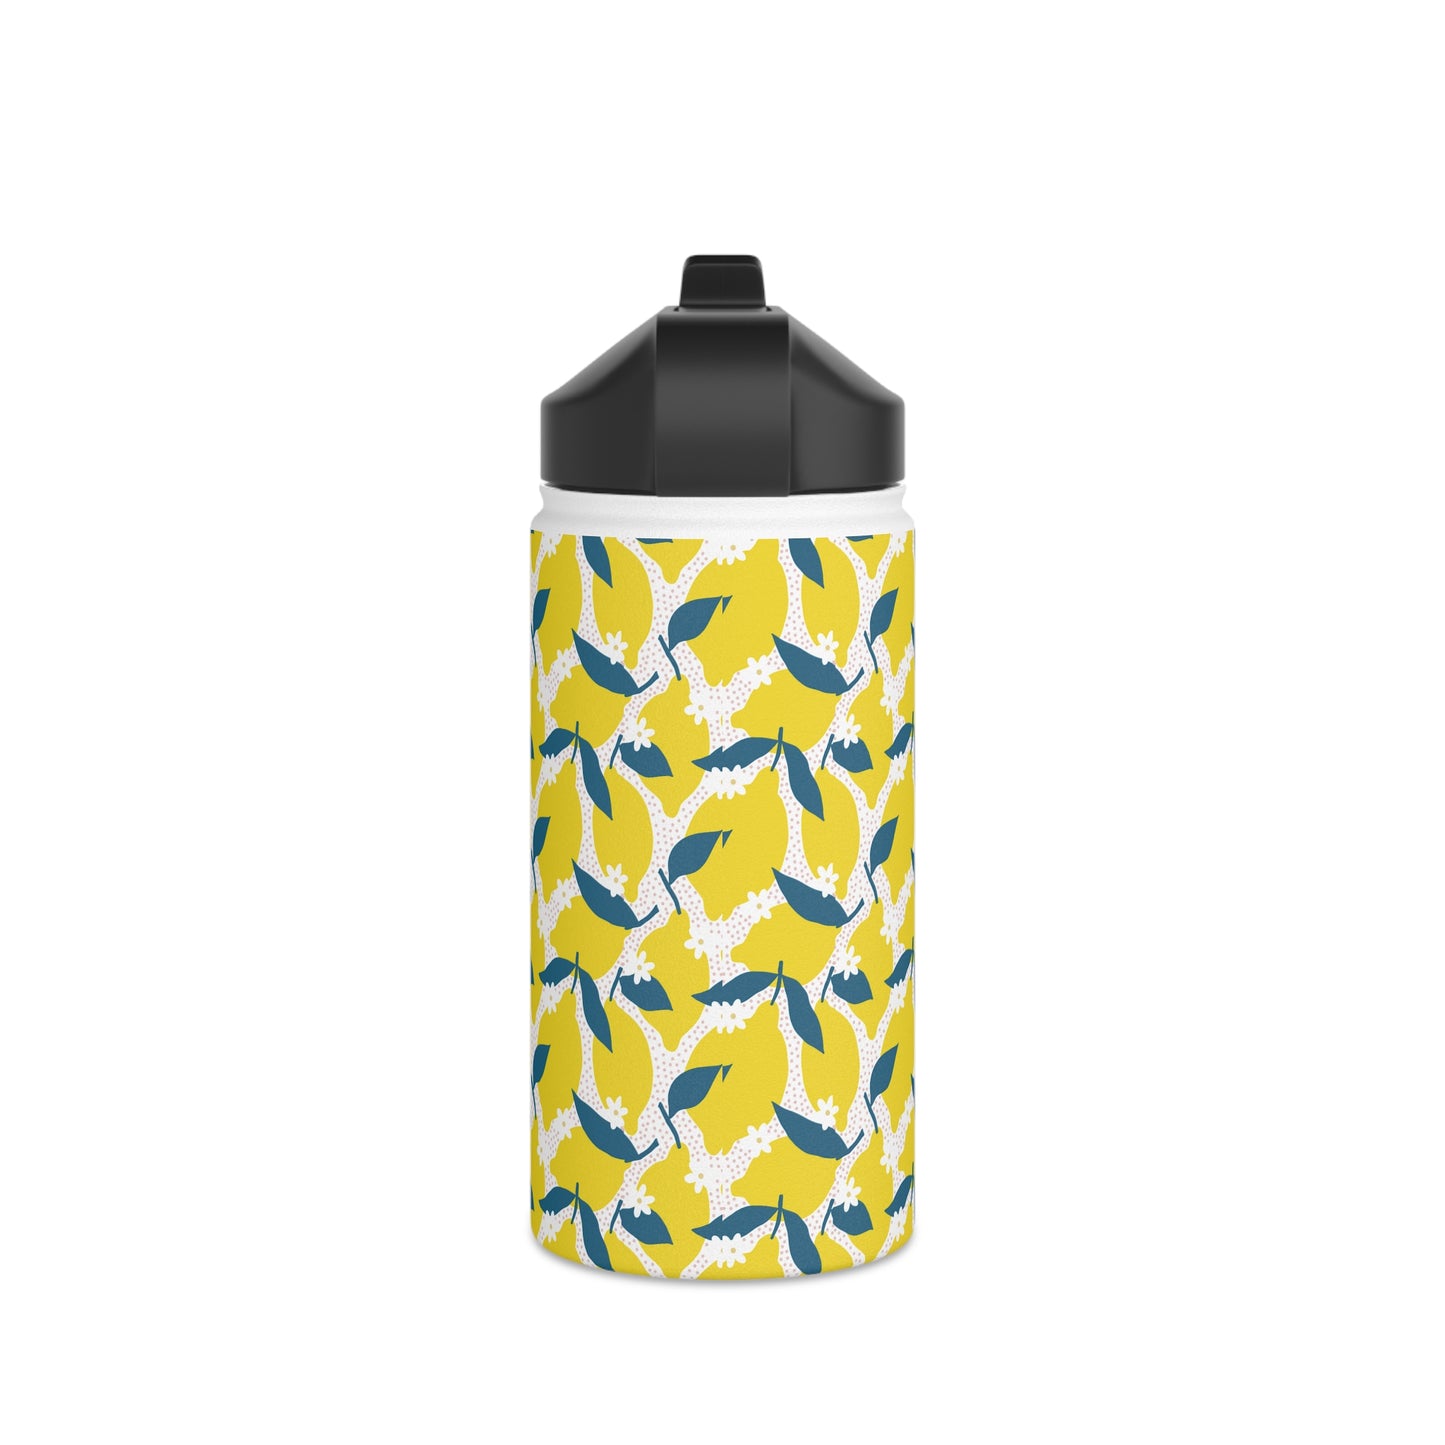 Niccie's Lemon Pattern Stainless Steel Water Bottle - Durable Design